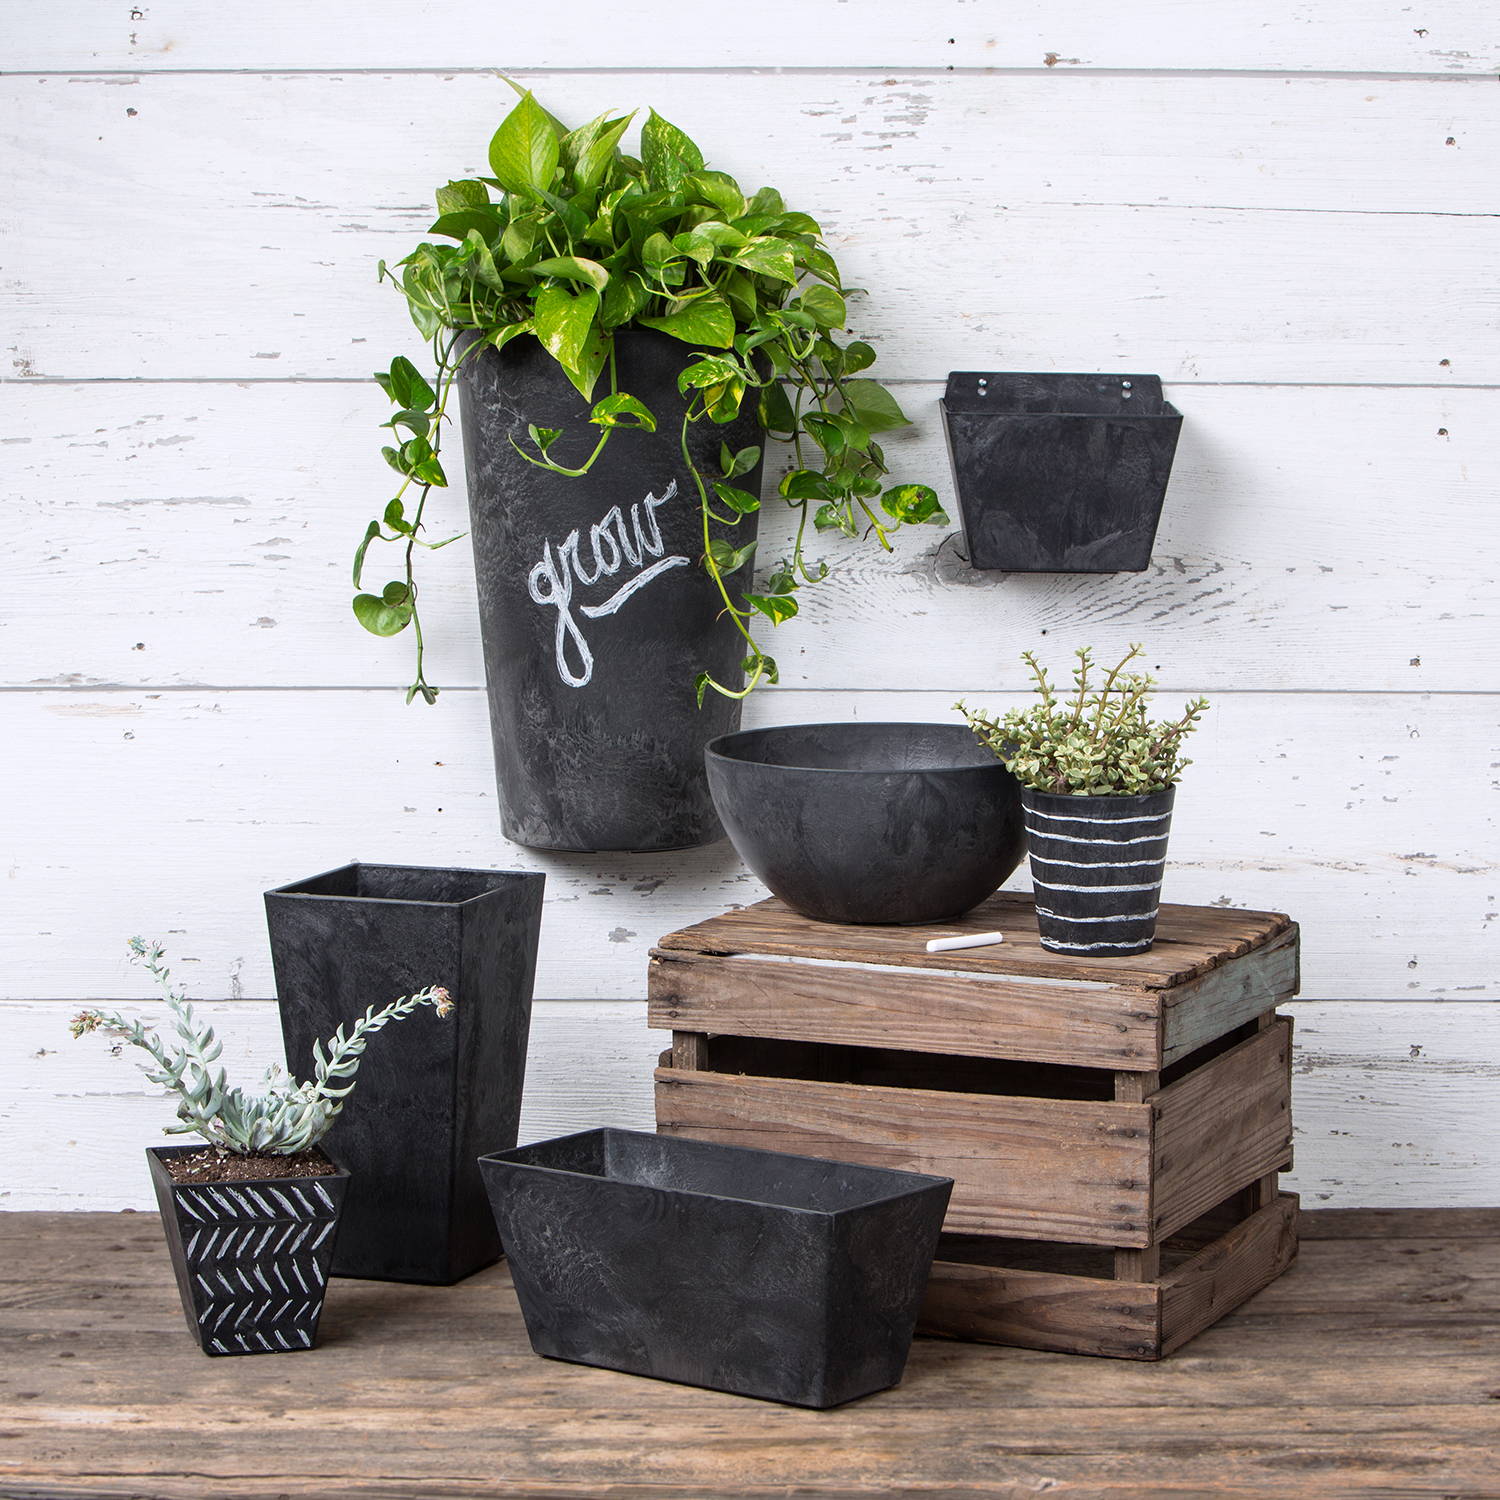 Black Root & Vessel decorative planters